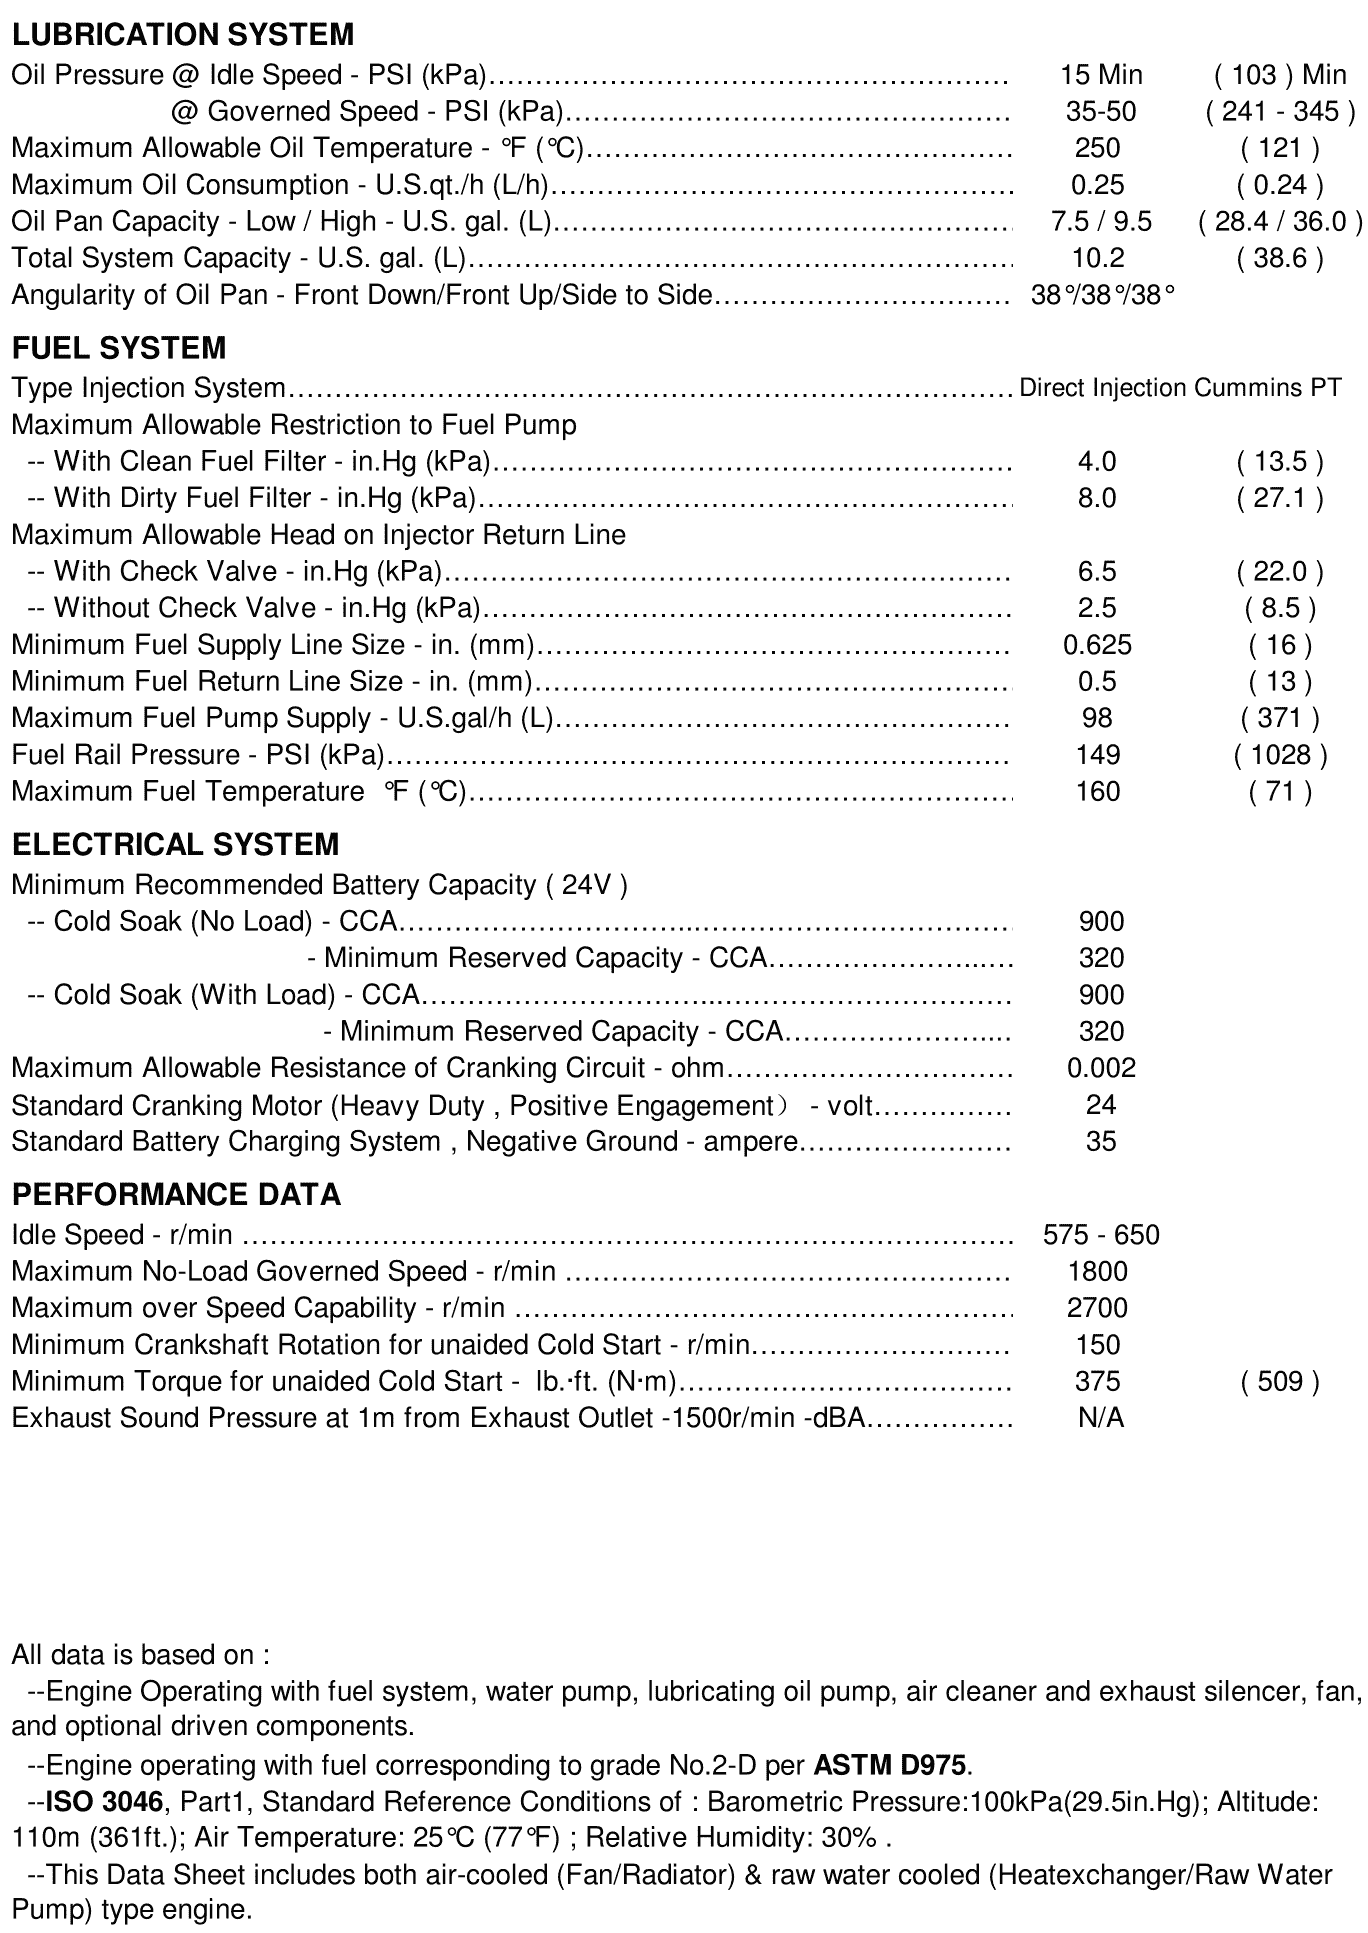 Cummins NTAA855-G7 datasheet